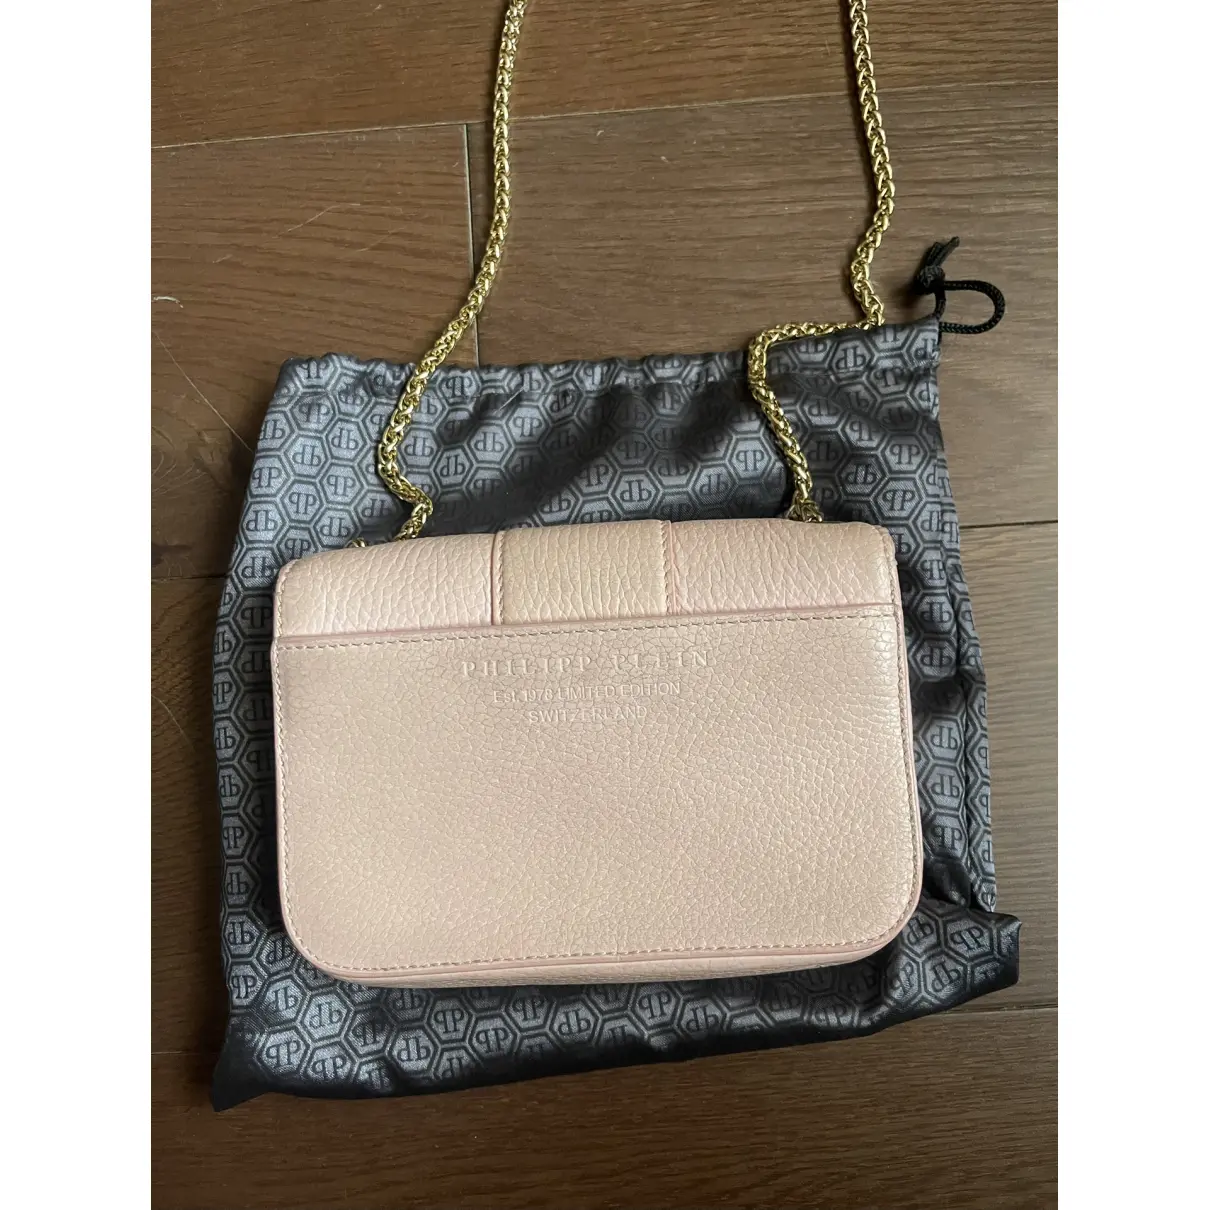 Buy Philipp Plein Leather mini bag online